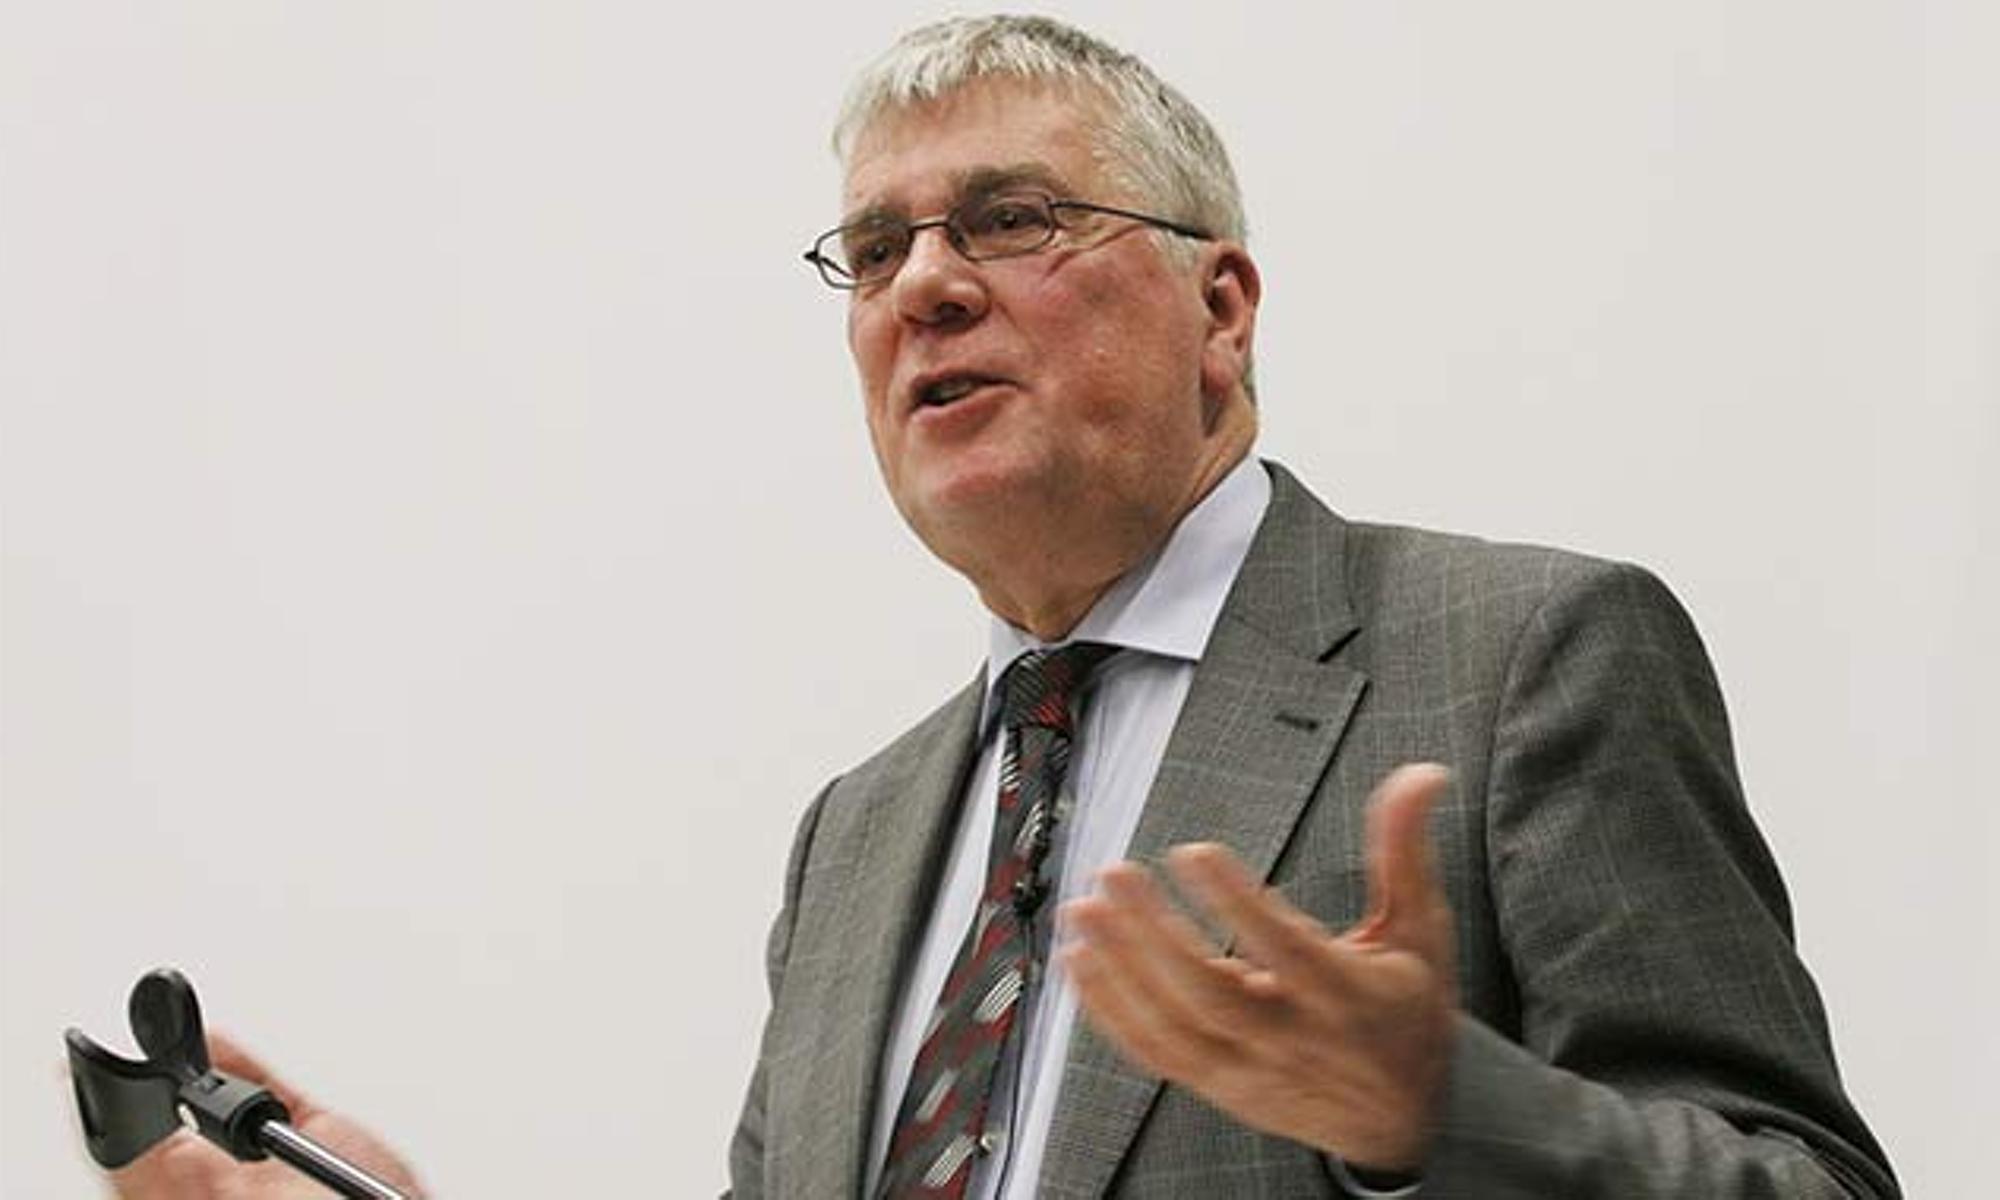 Dr. Reinhard Kiefer